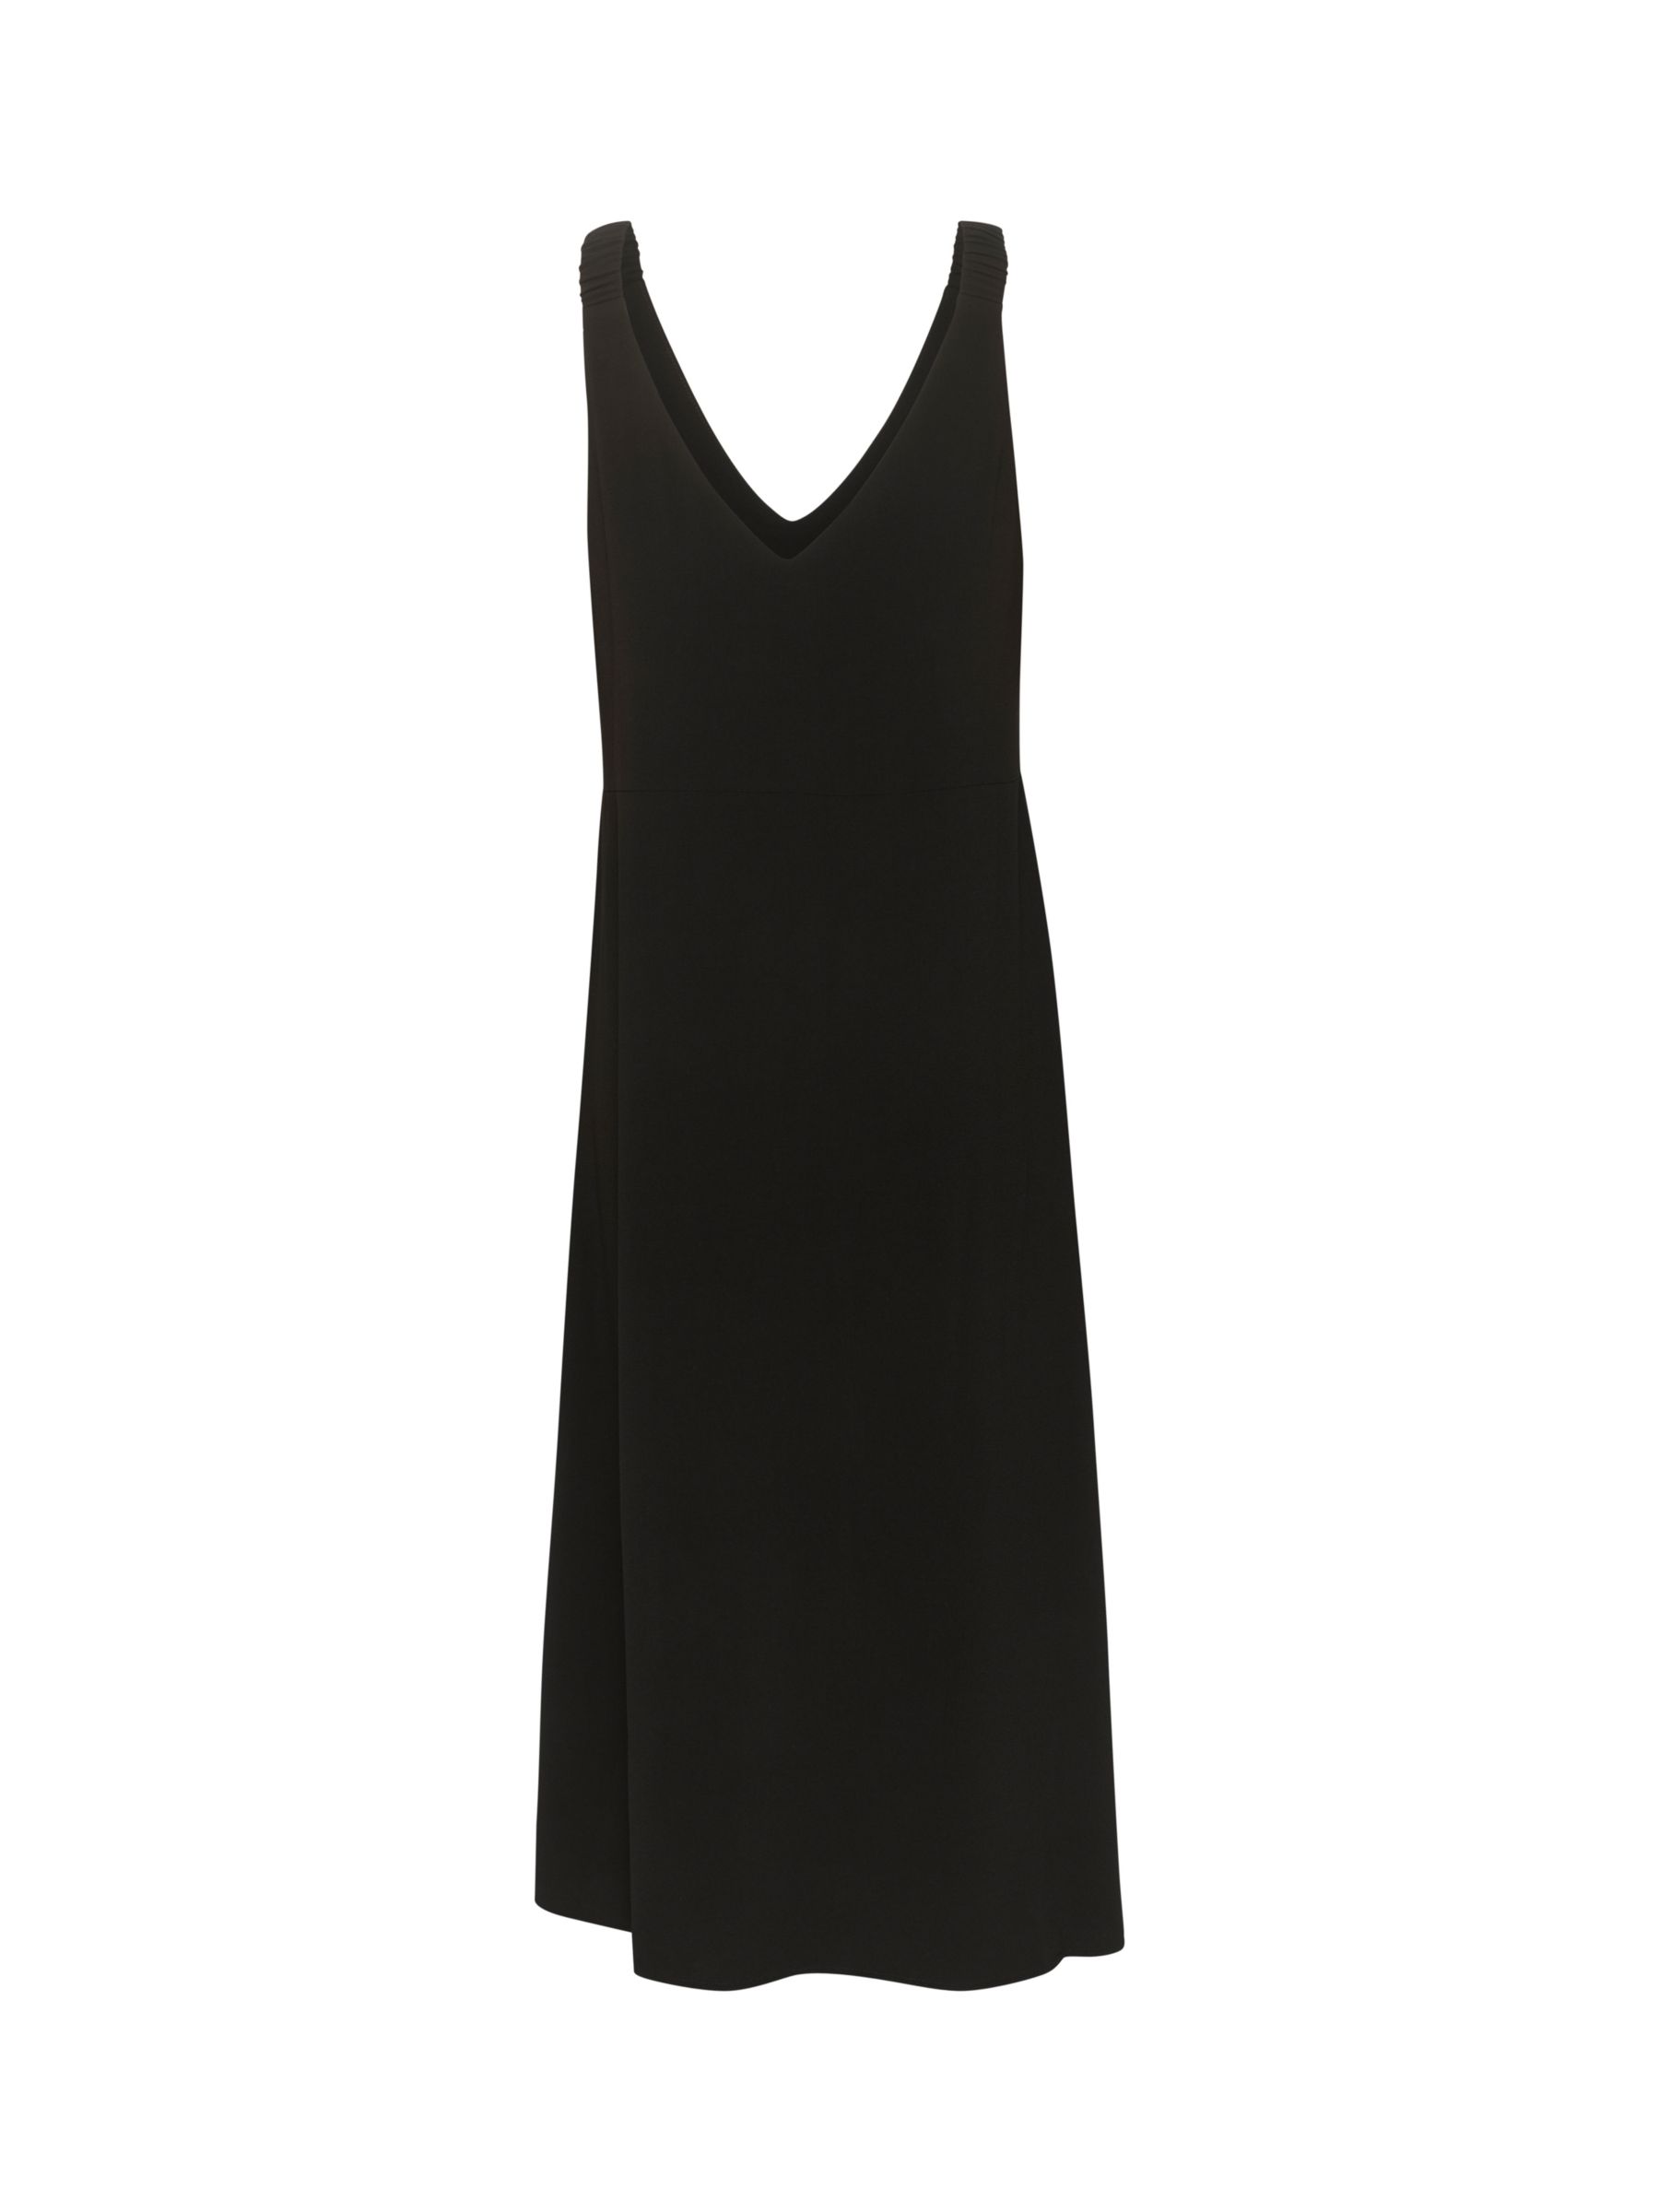 KAFFE Nora Sleeveless Midi Dress, Black, 12